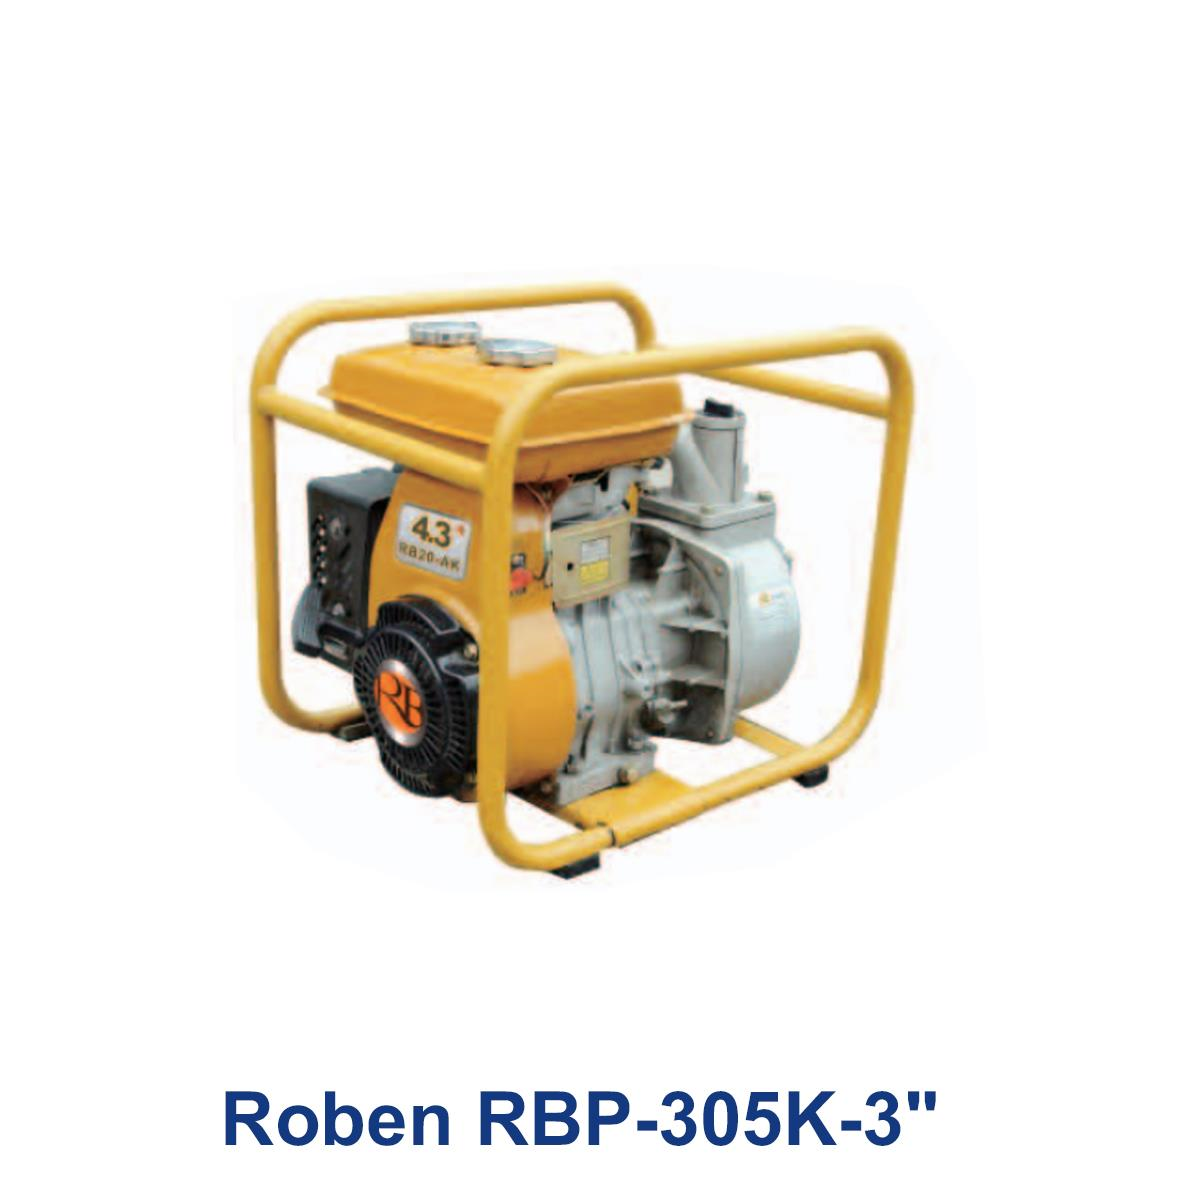 Roben-RBP-305K-3